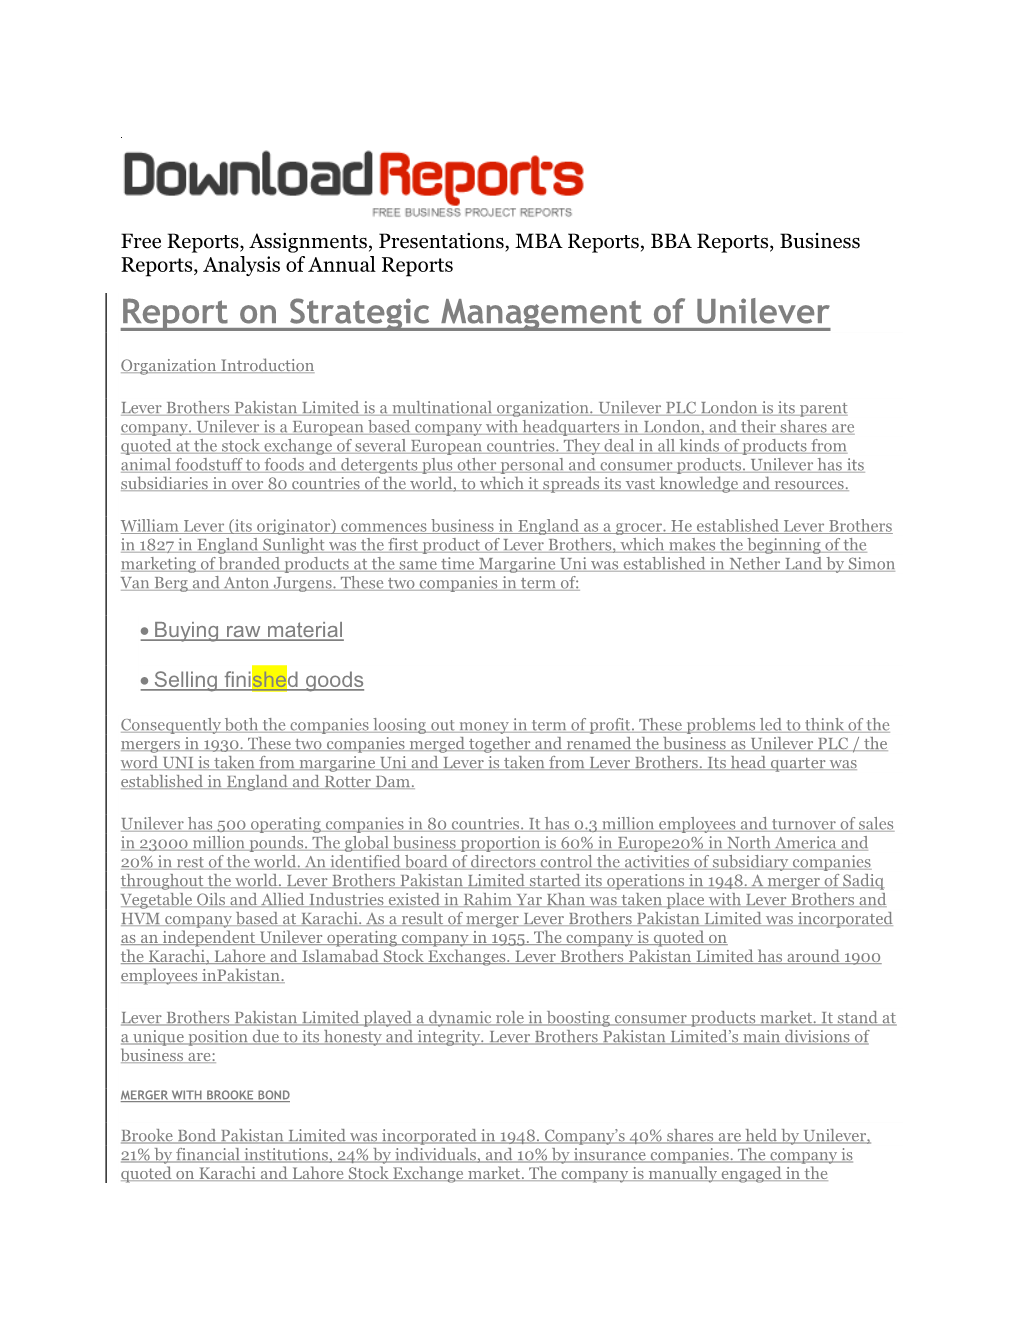 Report on Strategic Management of Unilever